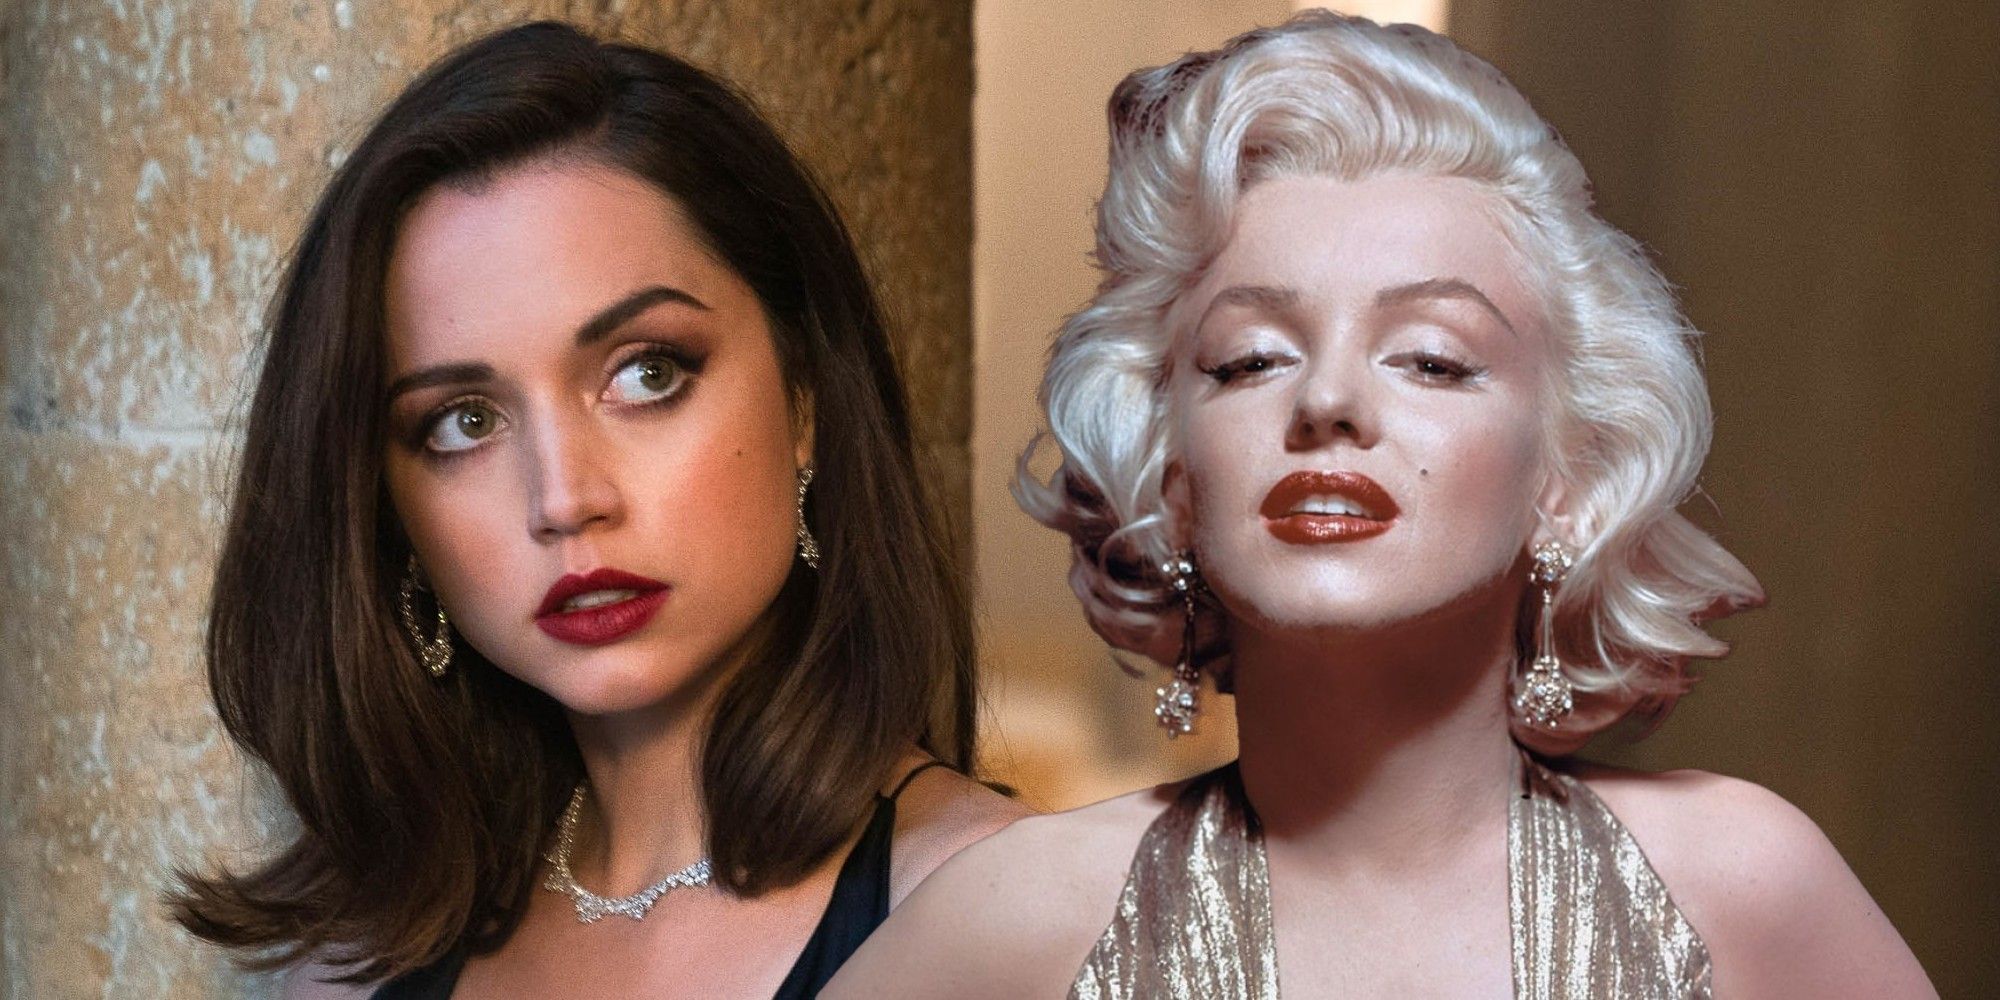 Ana de Armas’ Marilyn Monroe Biopic Pushed Back To 2022